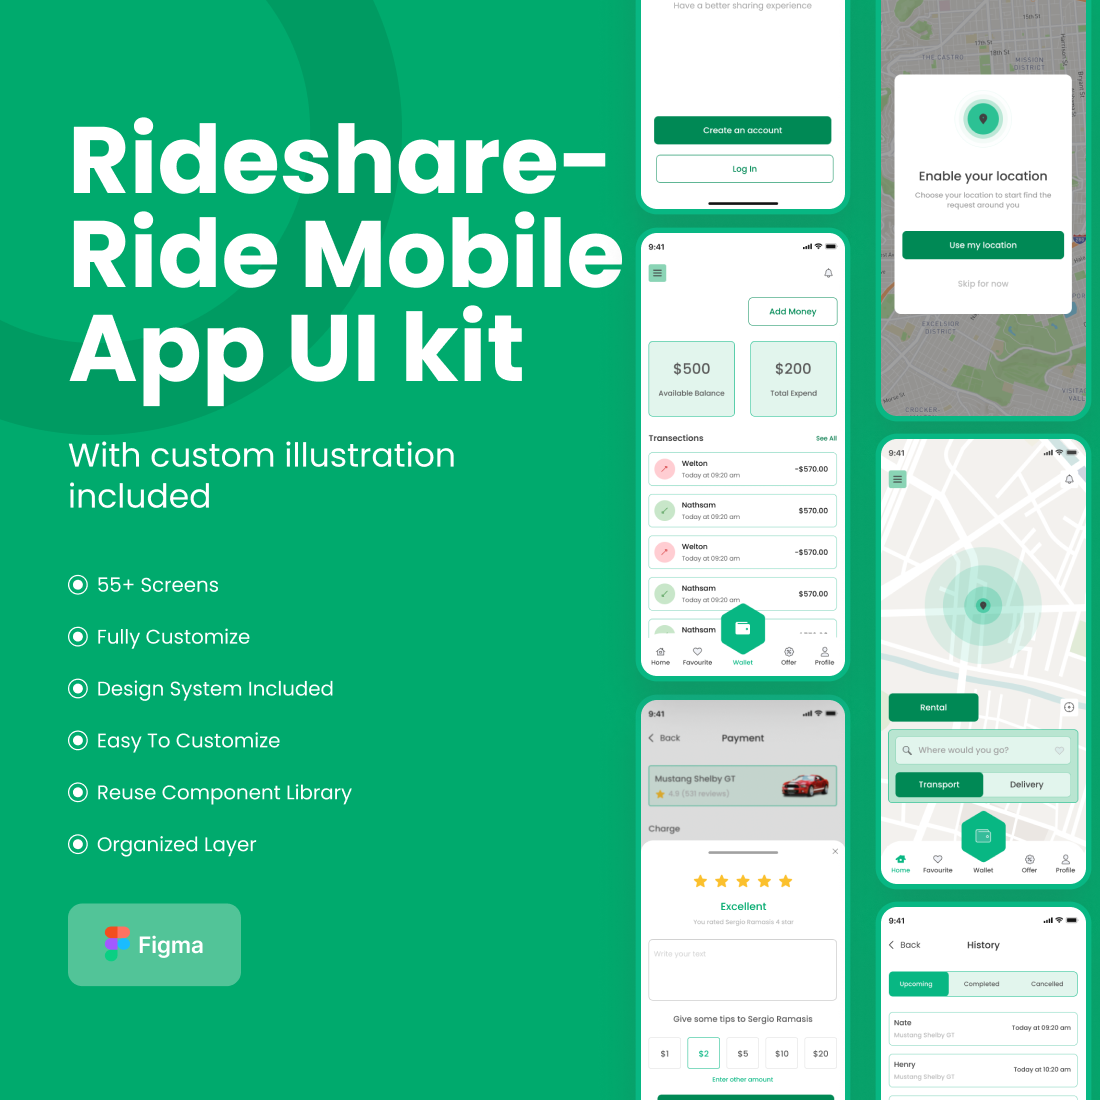 Rideshare Ride Mobile App UI kit cover image.